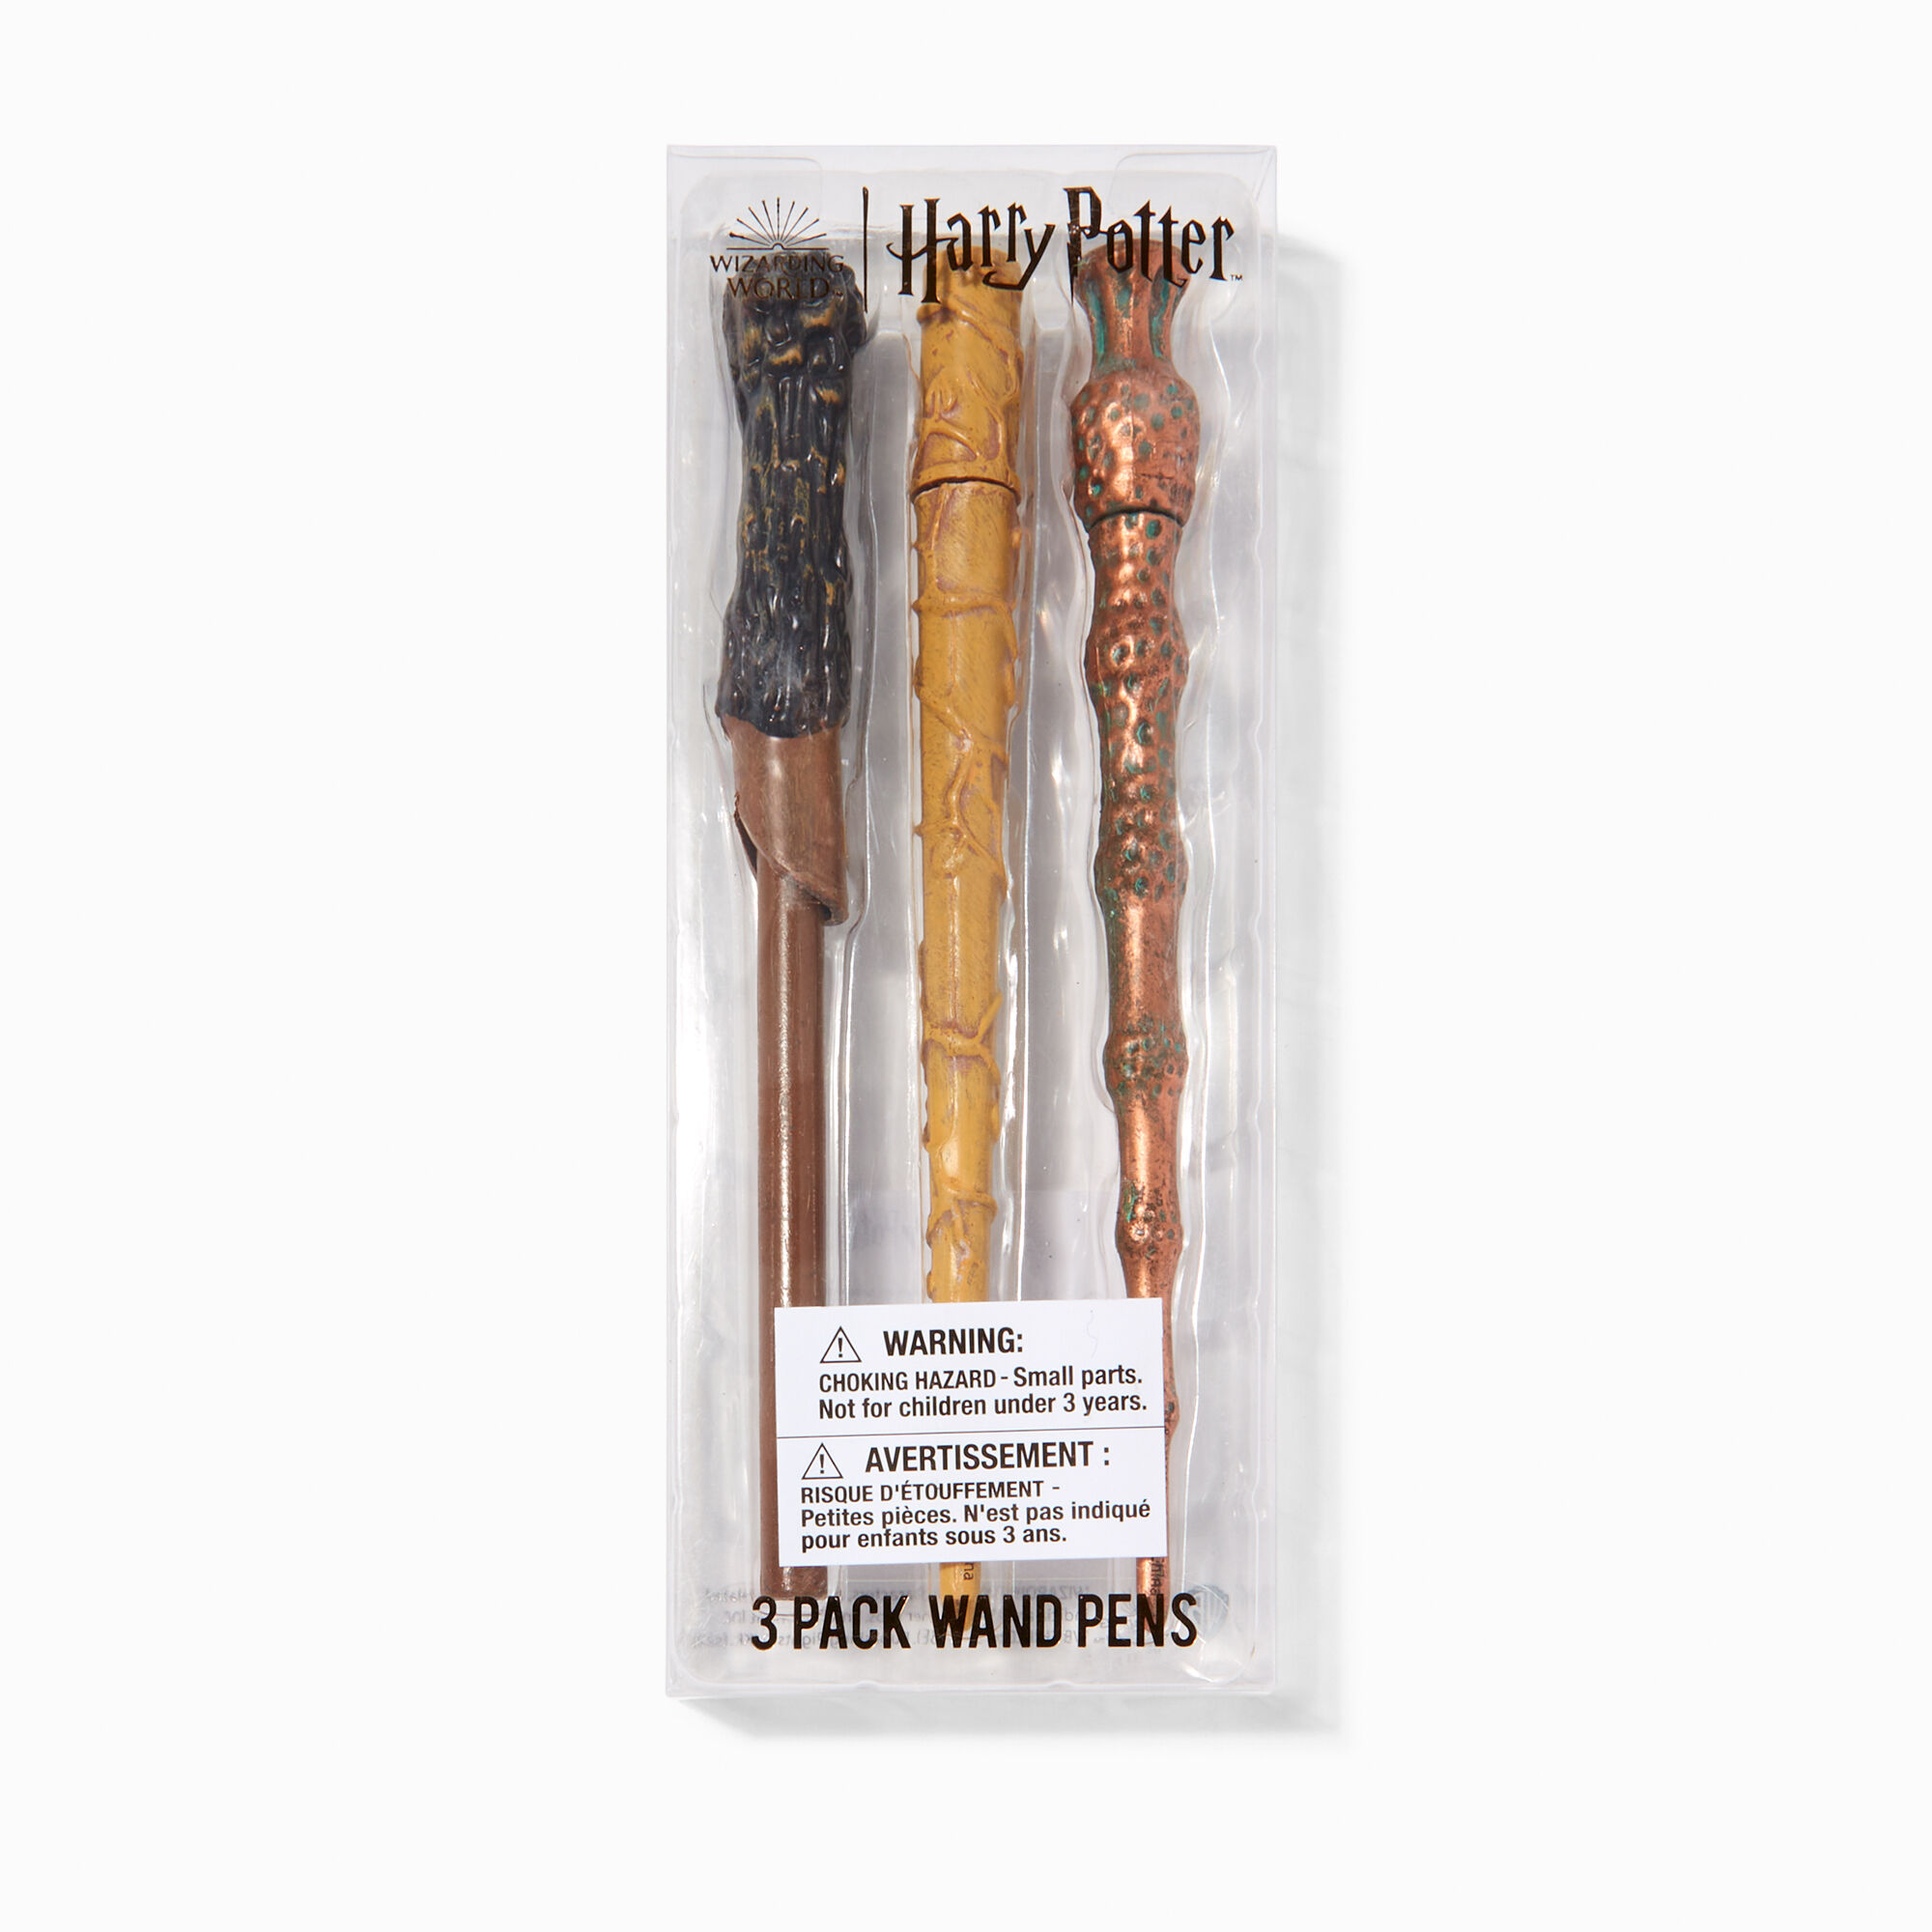 Harry Potter™ Wizarding World Wand Pen Set - 3 Pack